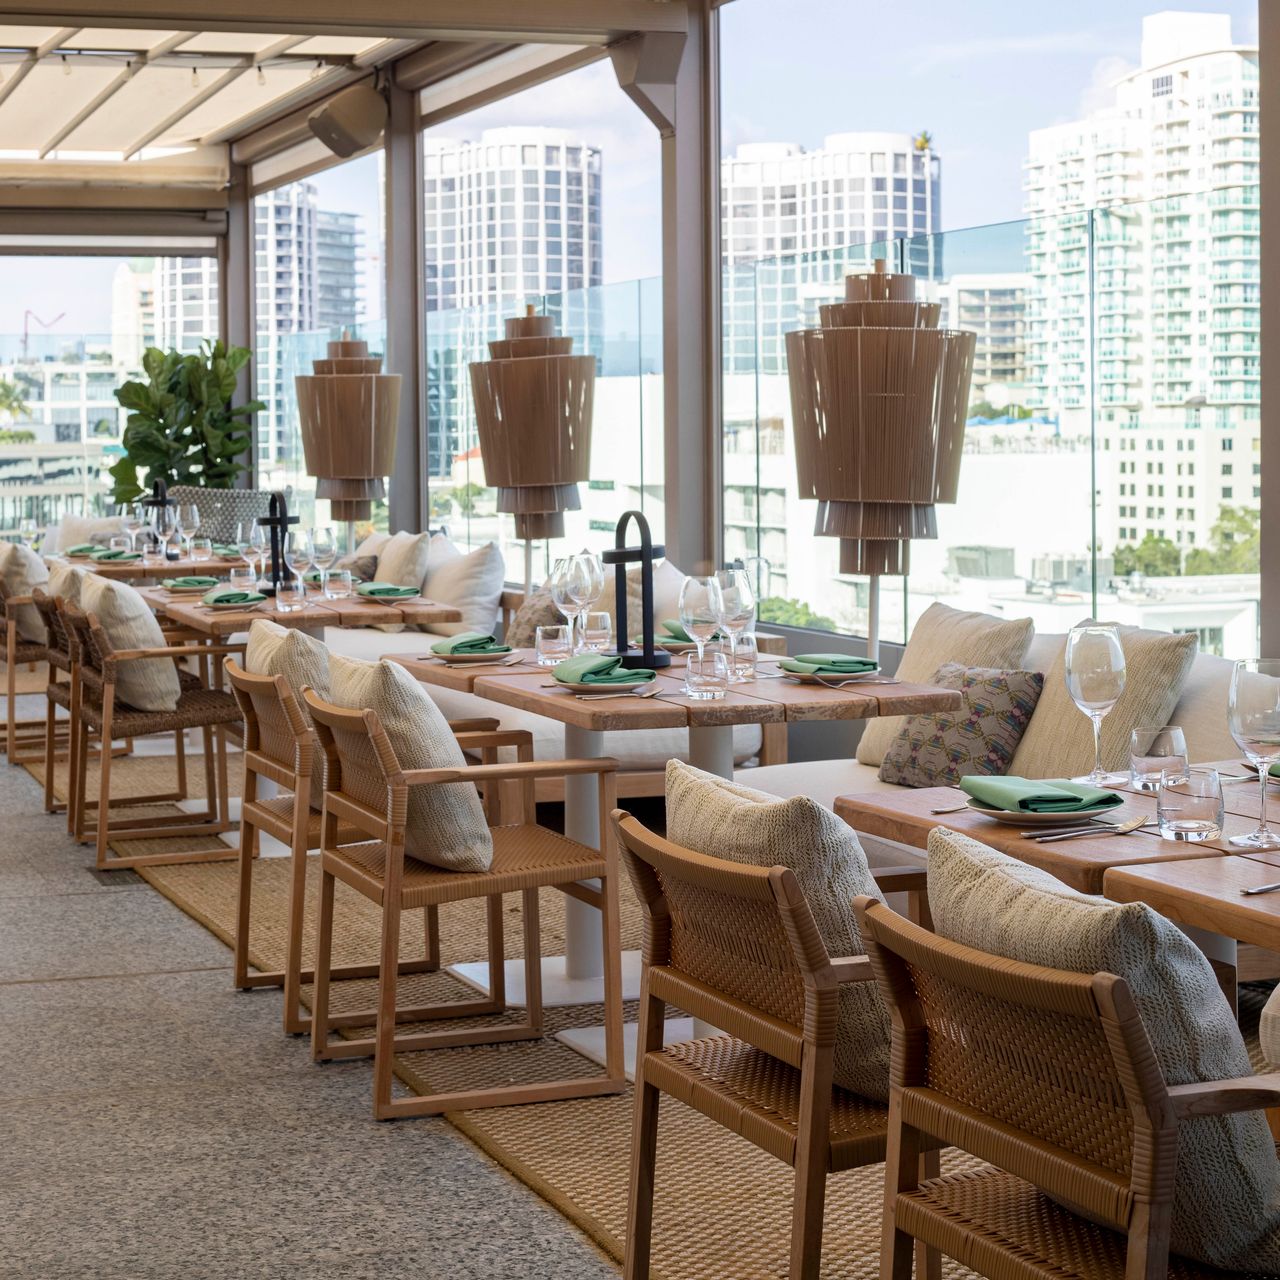 Level 6 Rooftop Restaurant - Miami, FL